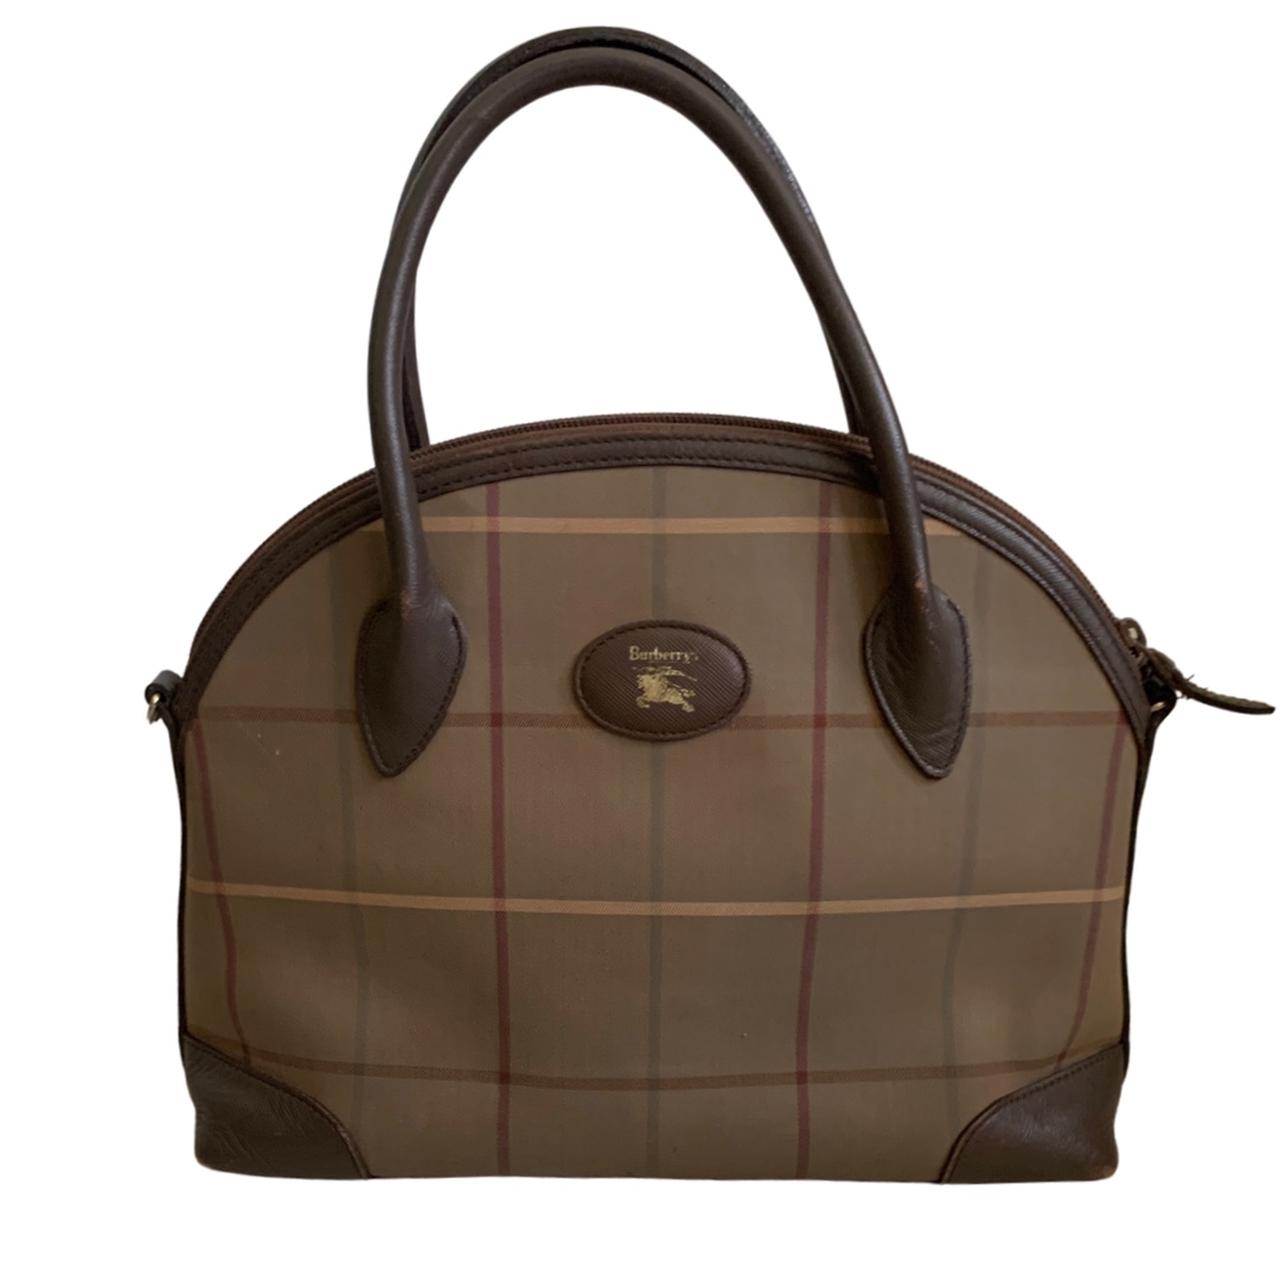 Vintage Burberry Alma Satchel Bag. Used and